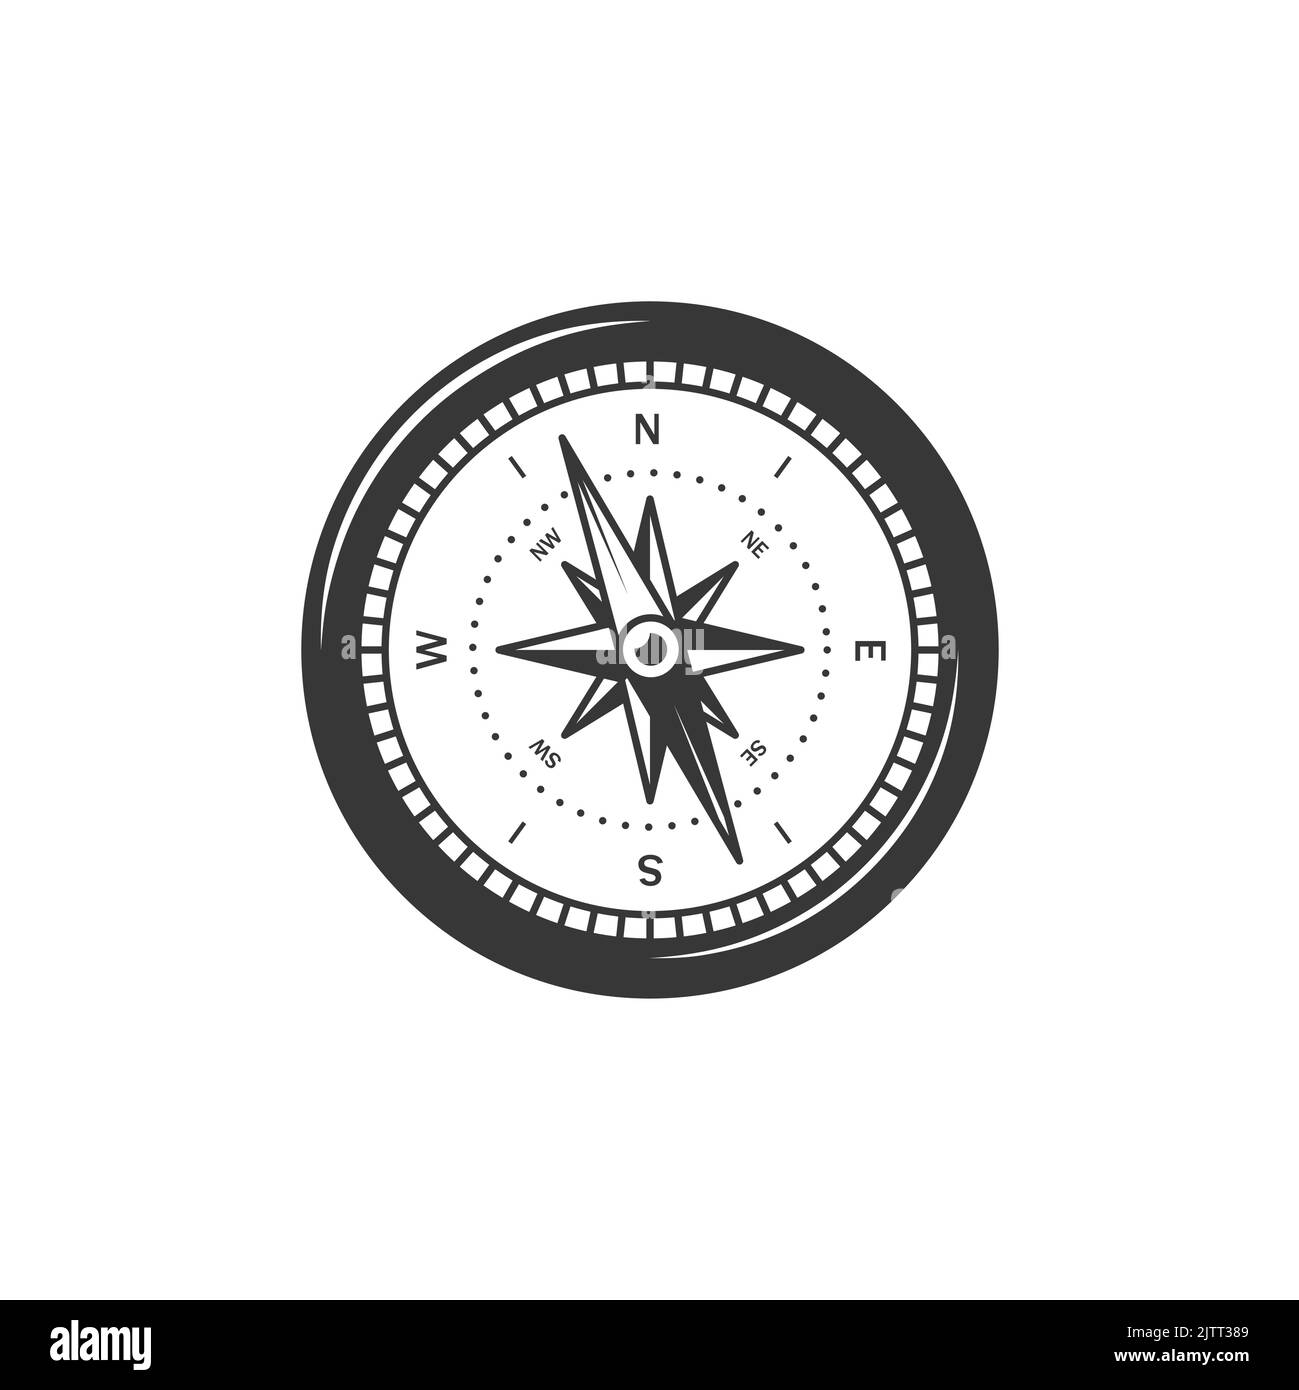 Navigational Ship's Compass Stock Photo - Alamy